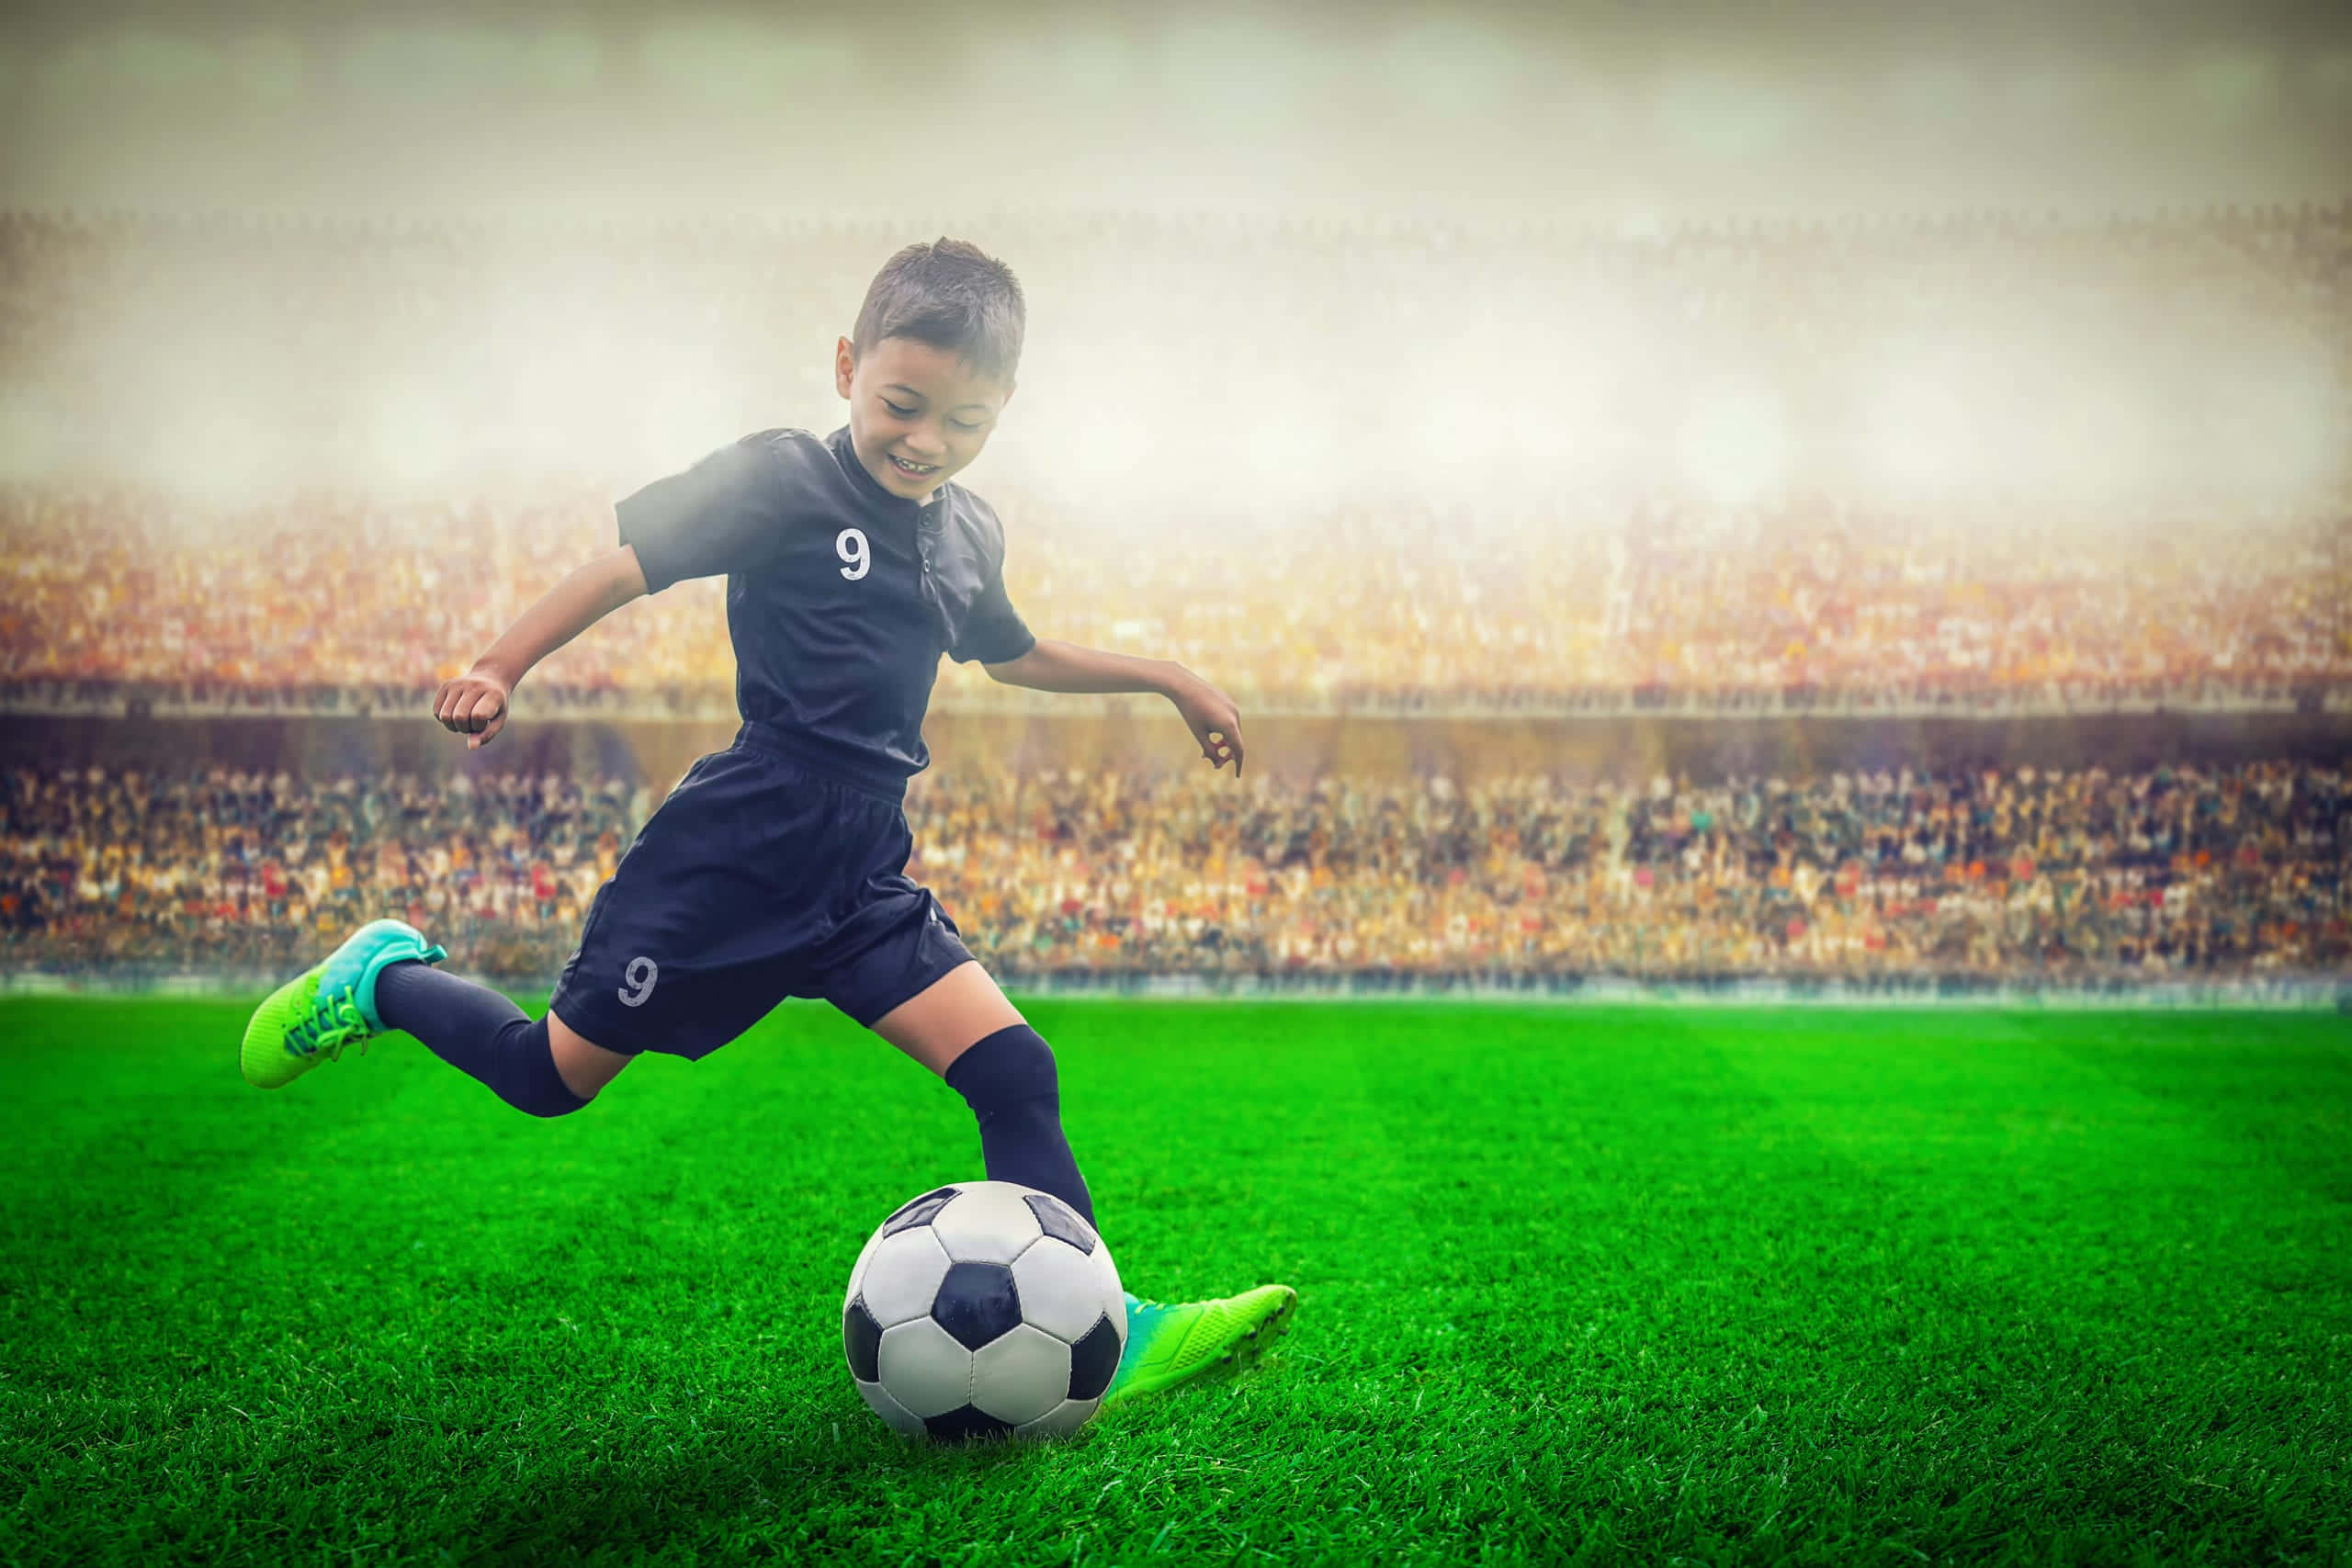 Captivating Kids Soccer Training Wallpaper